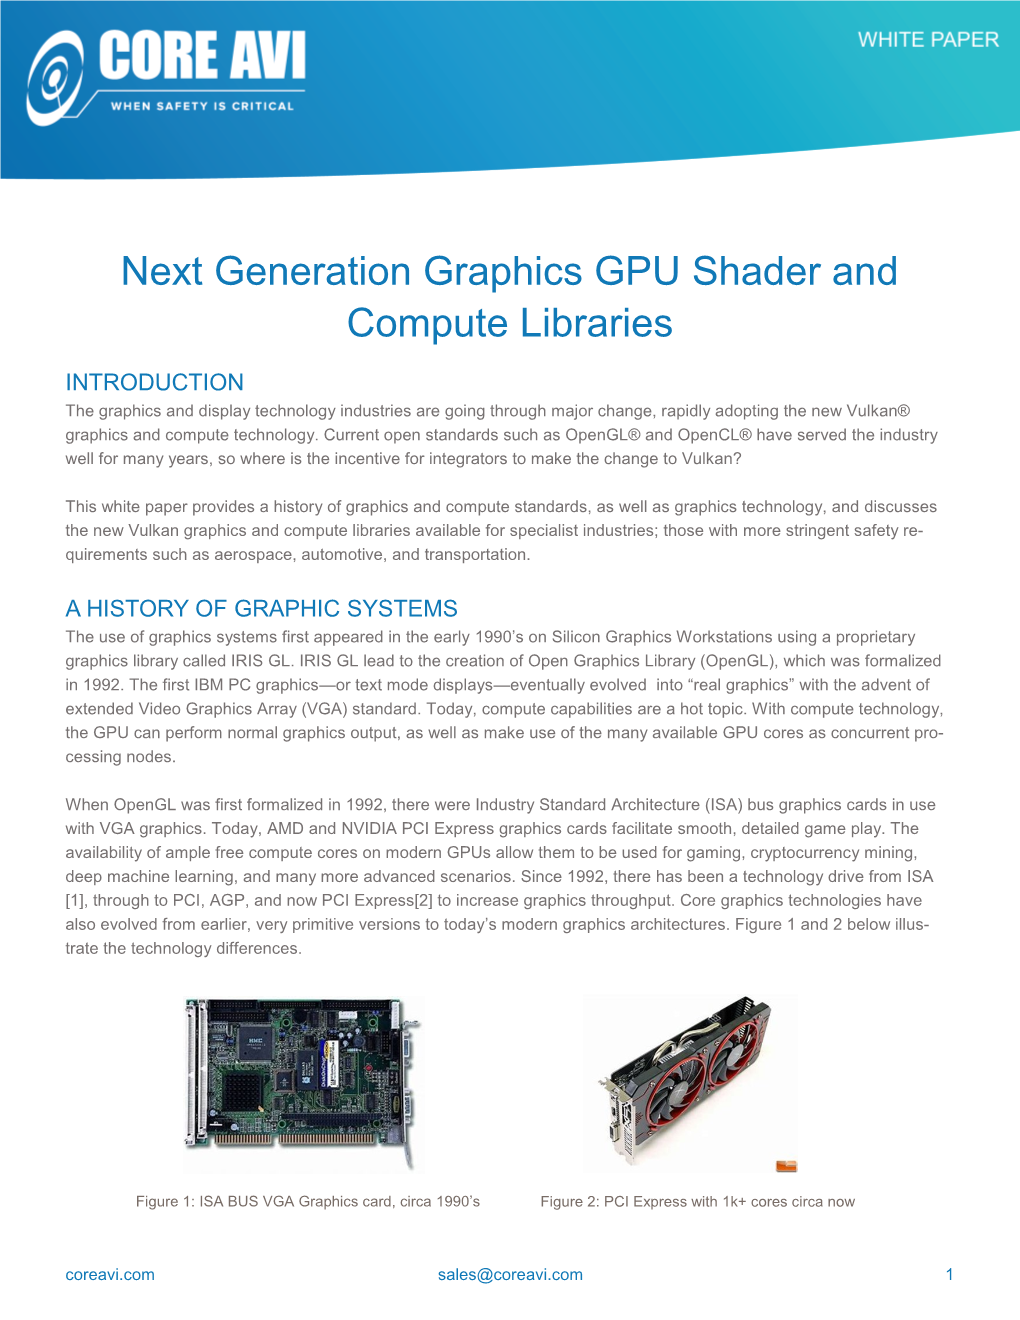 White Paper: Next Generation Graphics GPU Shader and Compute Libraries